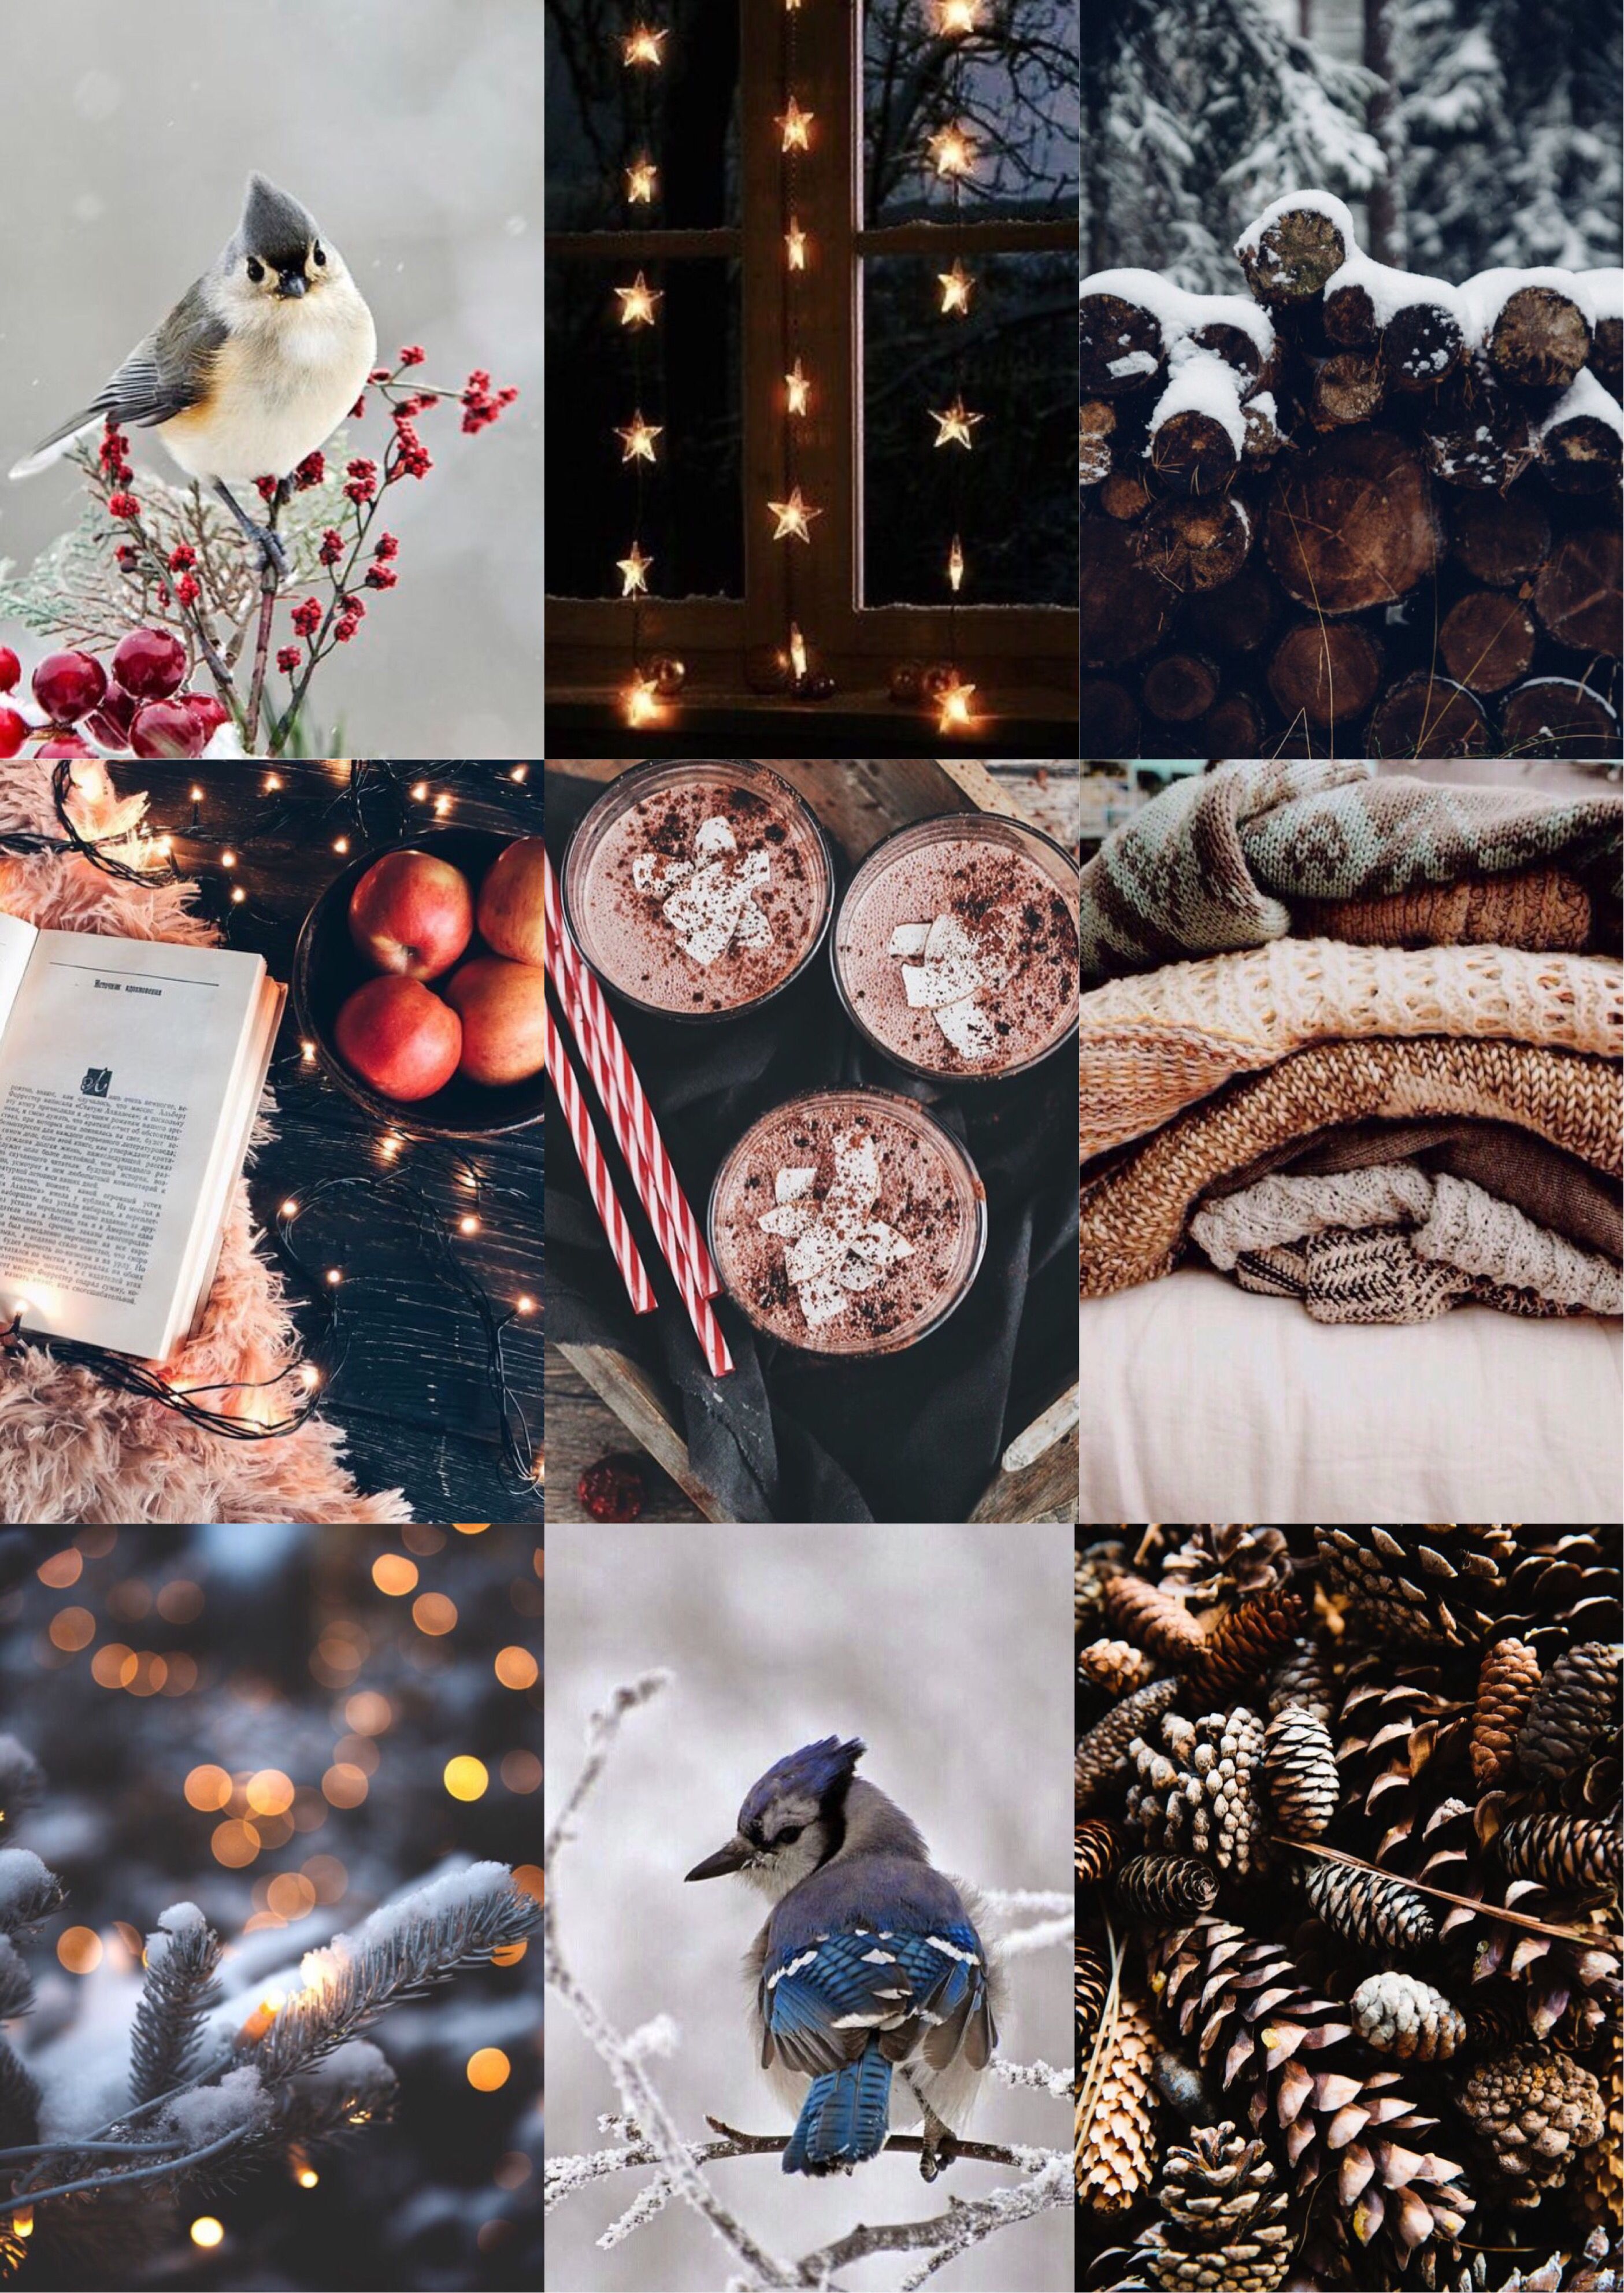 Download 46+ Winter Wallpaper Iphone Collage Foto Terbaru - Posts.id